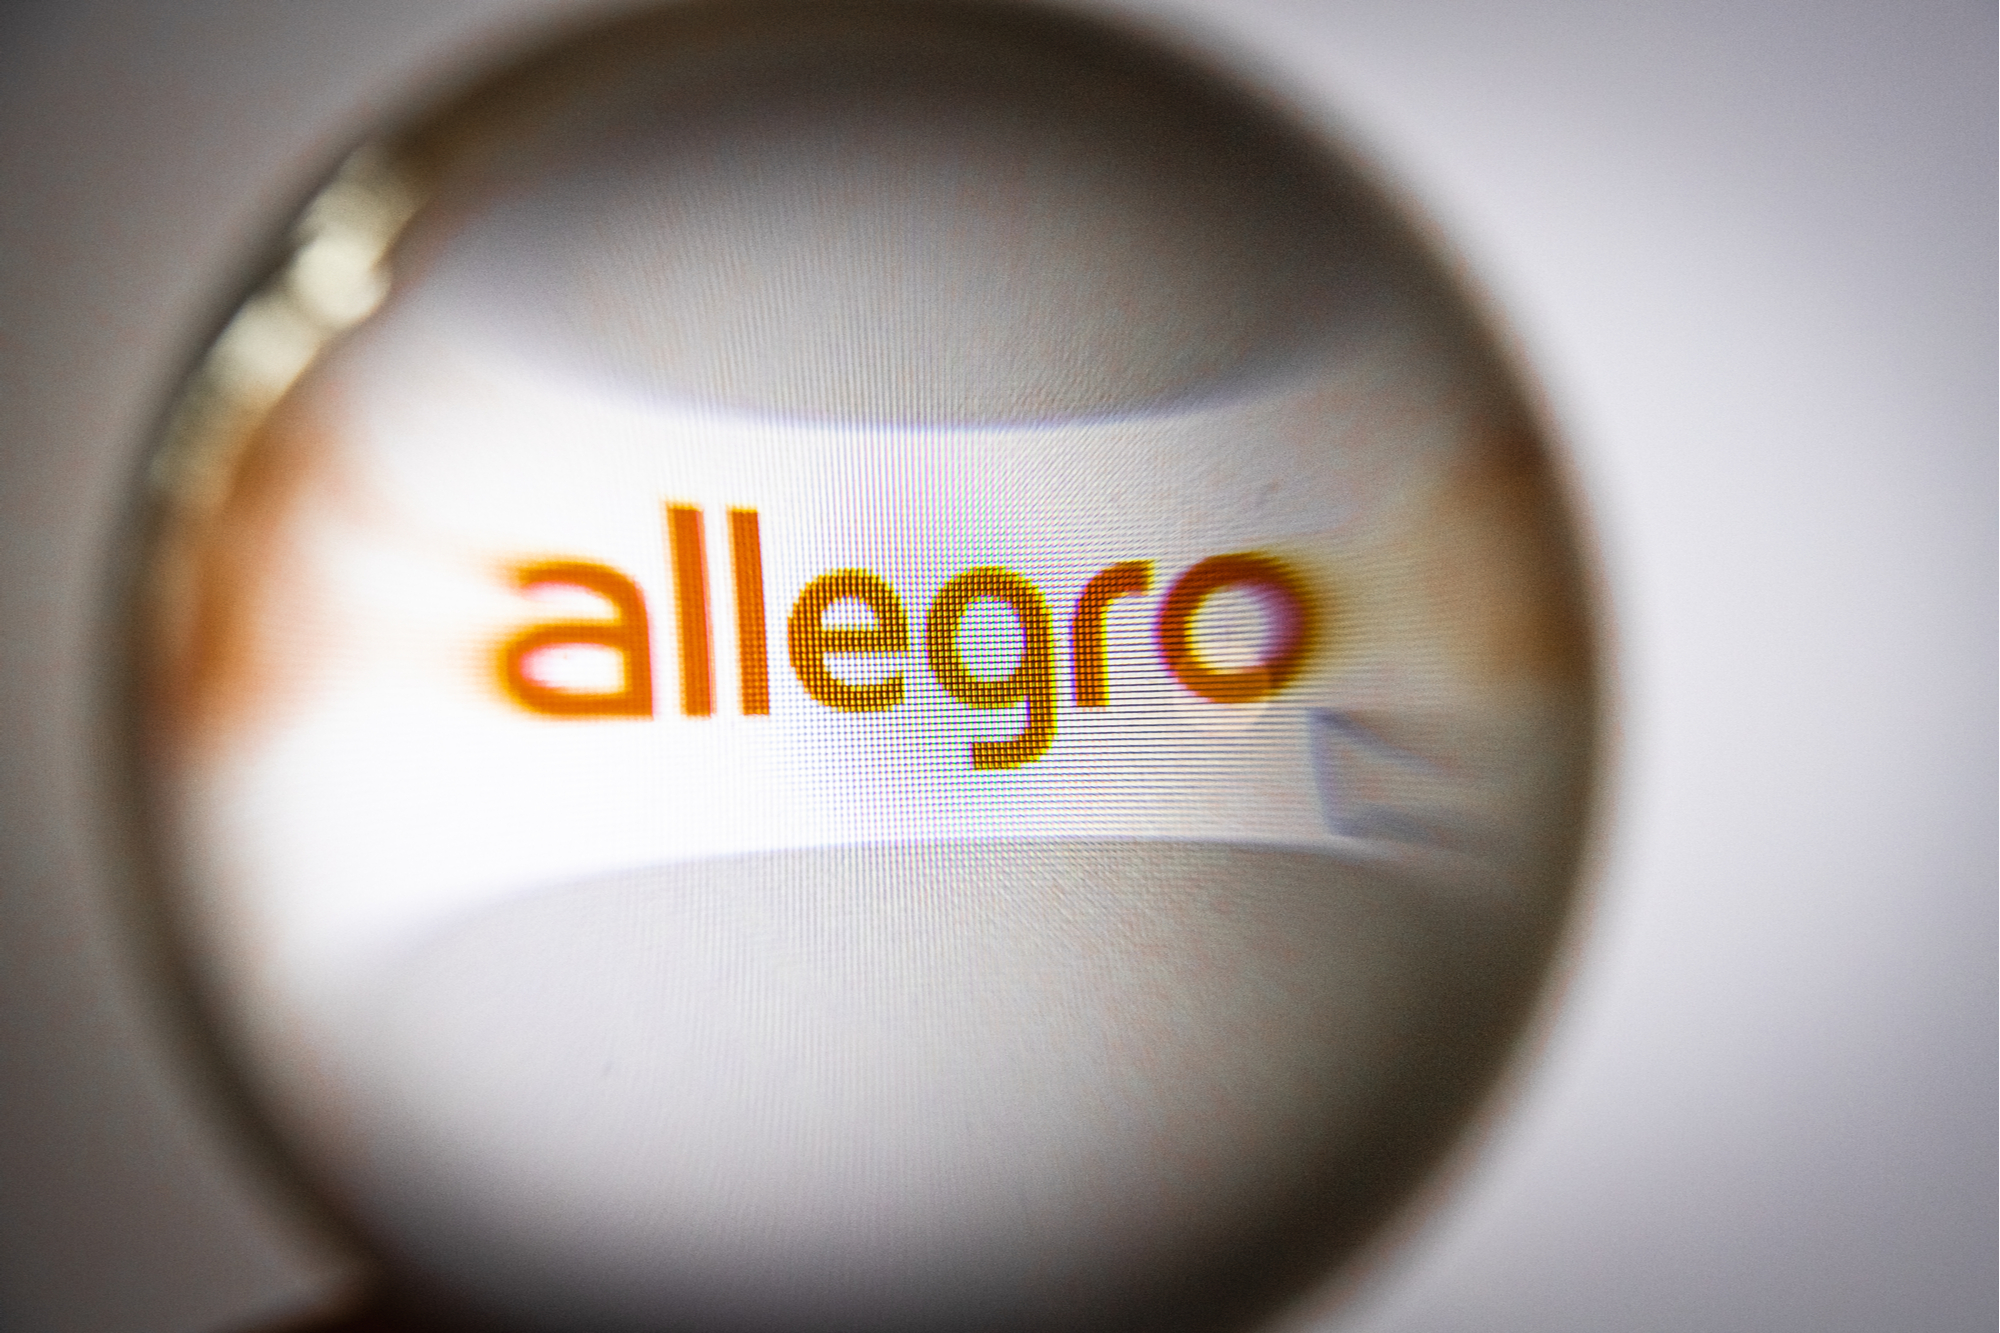 Allegro. Fot. MOZCO Mateusz Szymanski / Shutterstock.com